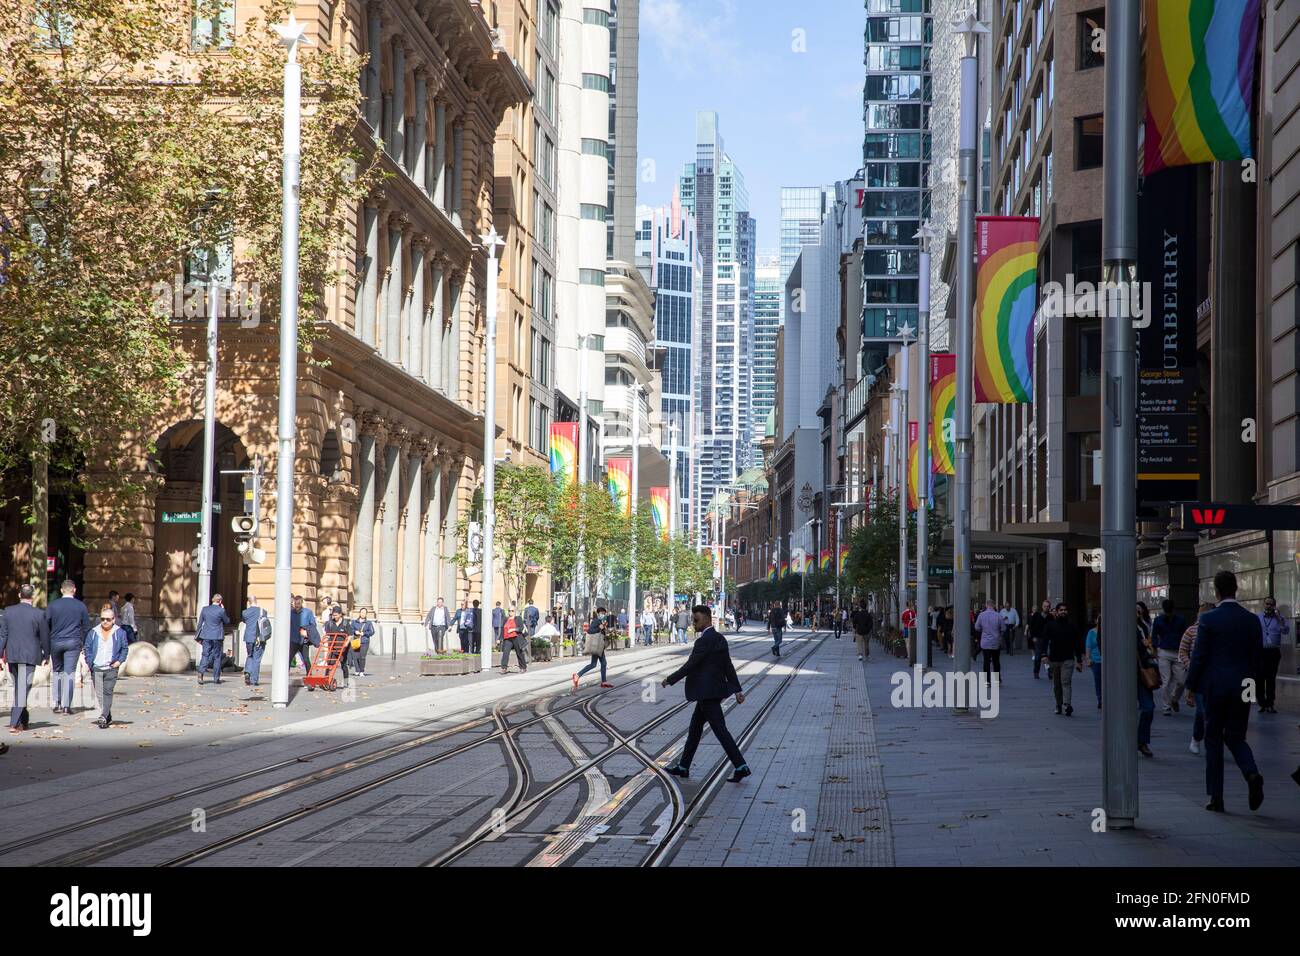 Sydney city centre view along George street with rainbow flags flying,Sydney,Australia Stock Photo